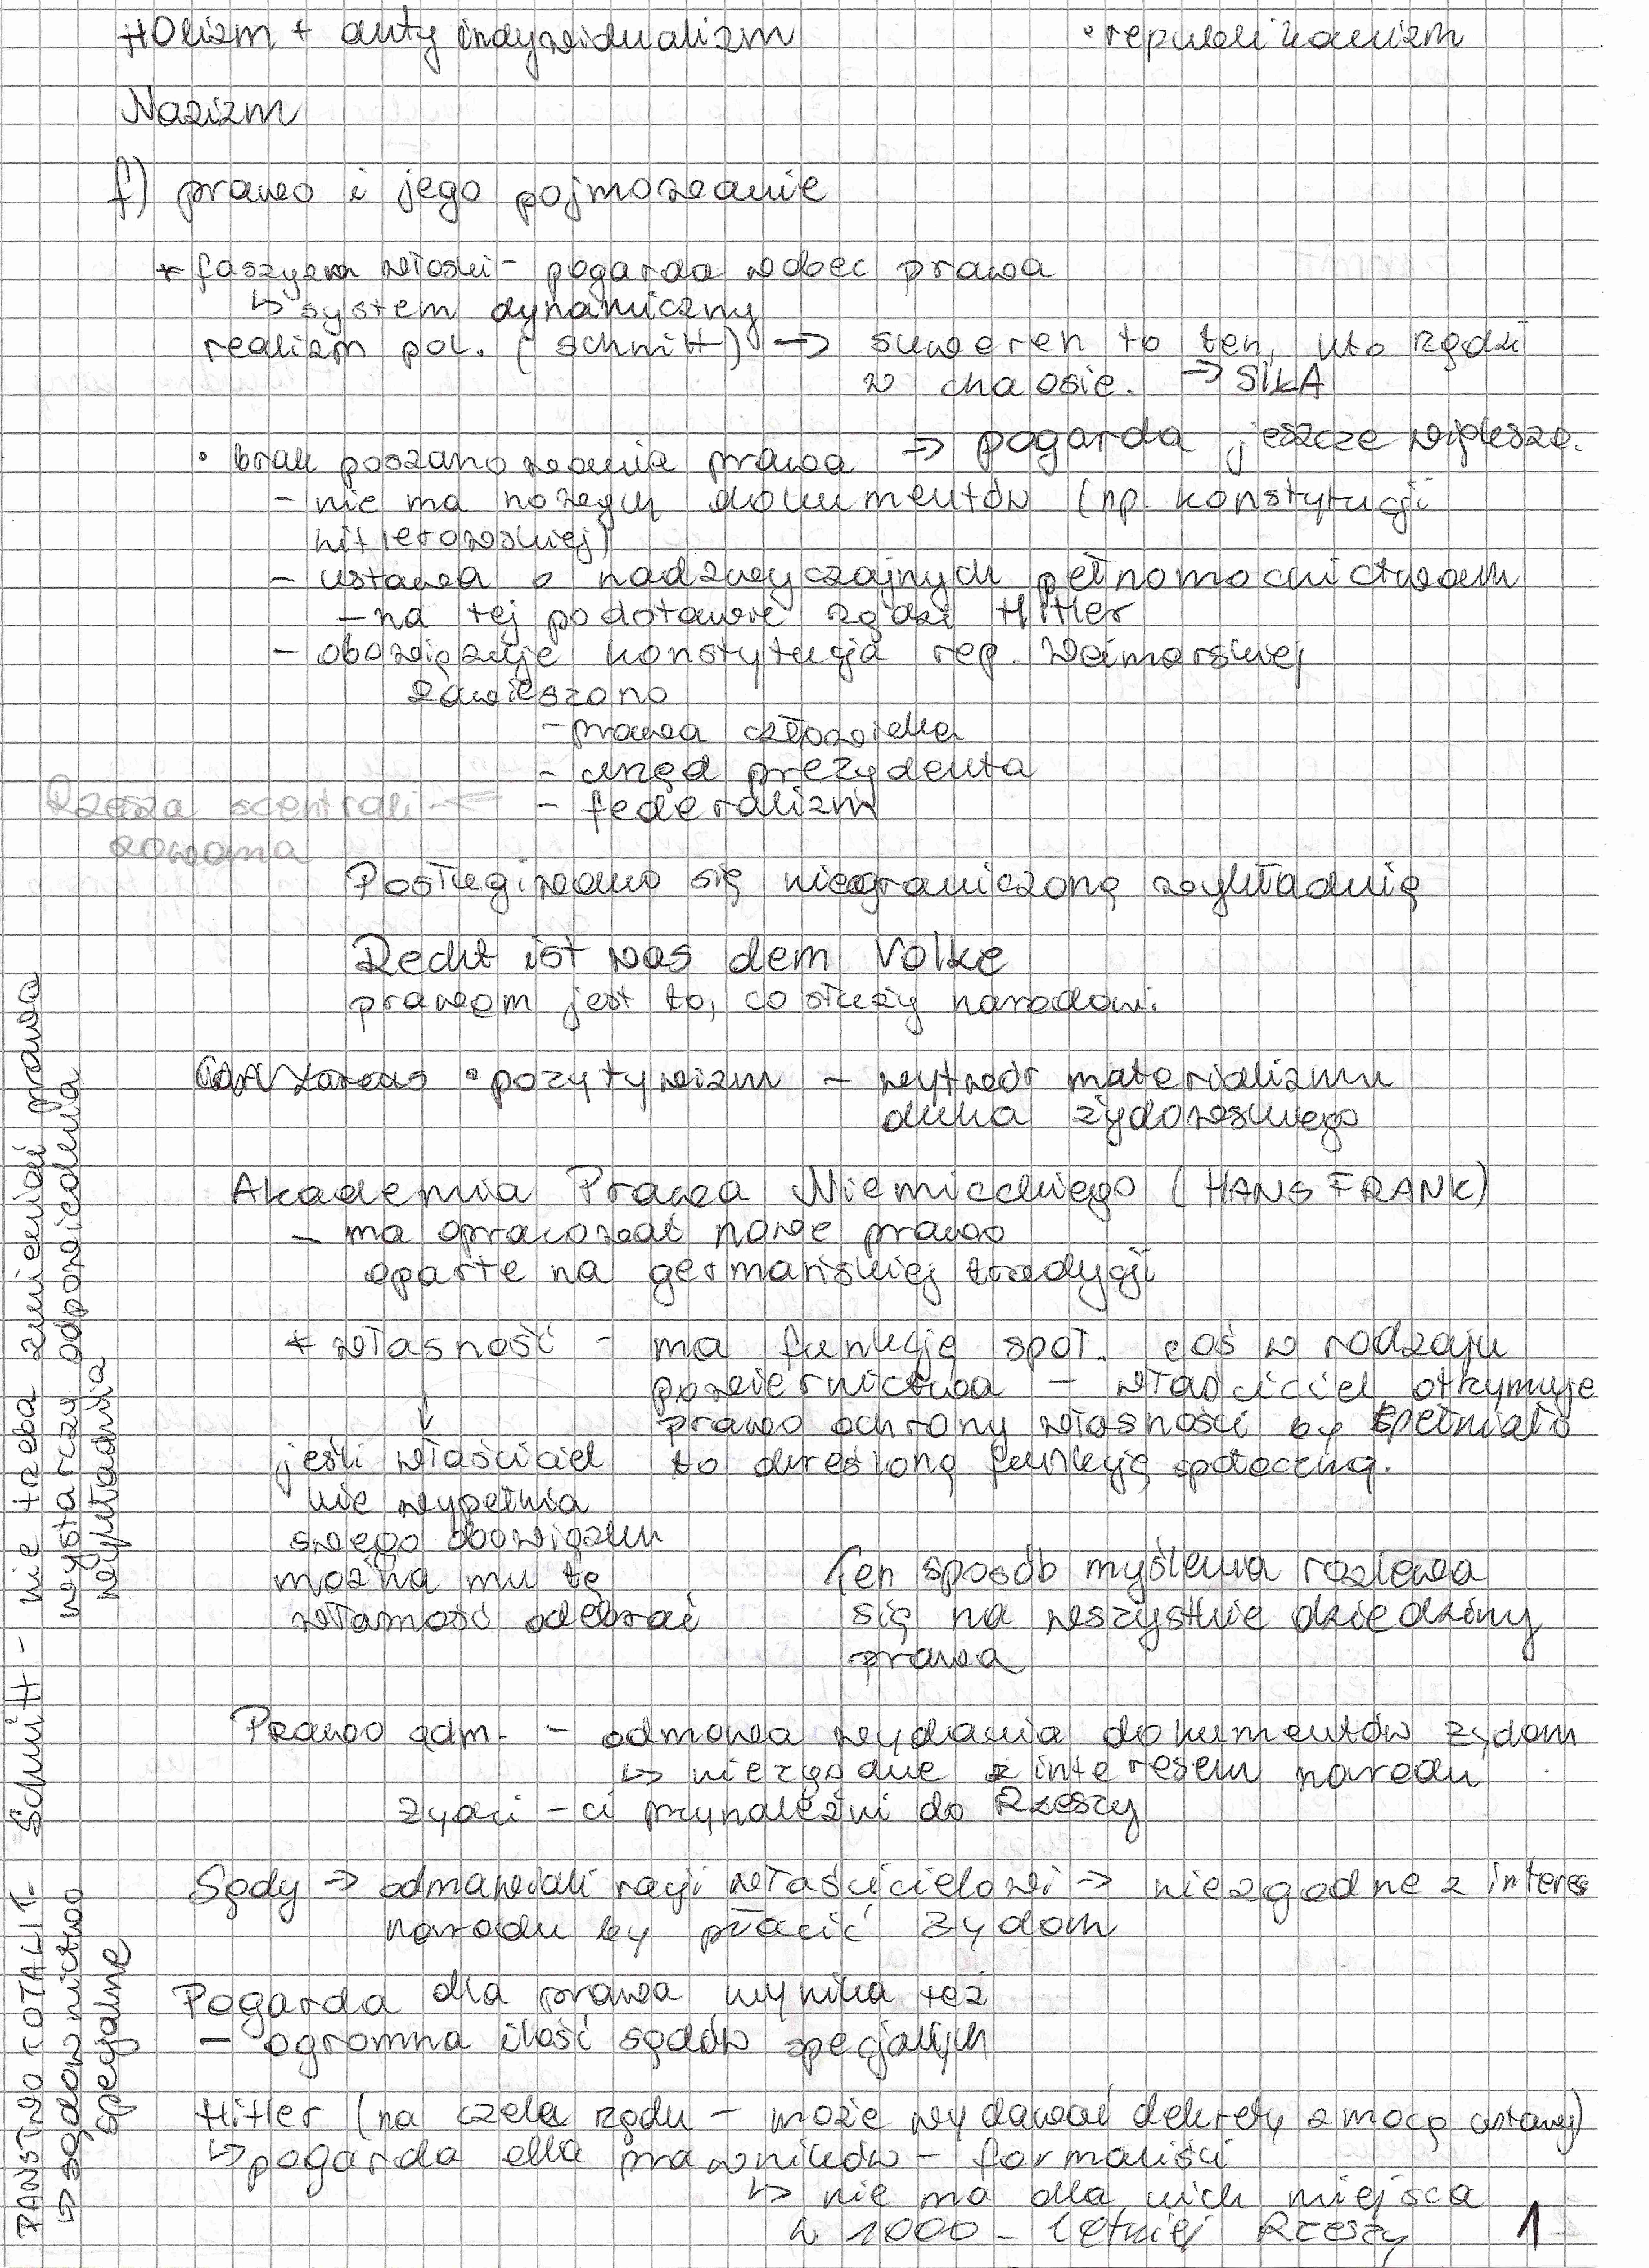 Systemy totalitarne  - skany notatek - strona 1